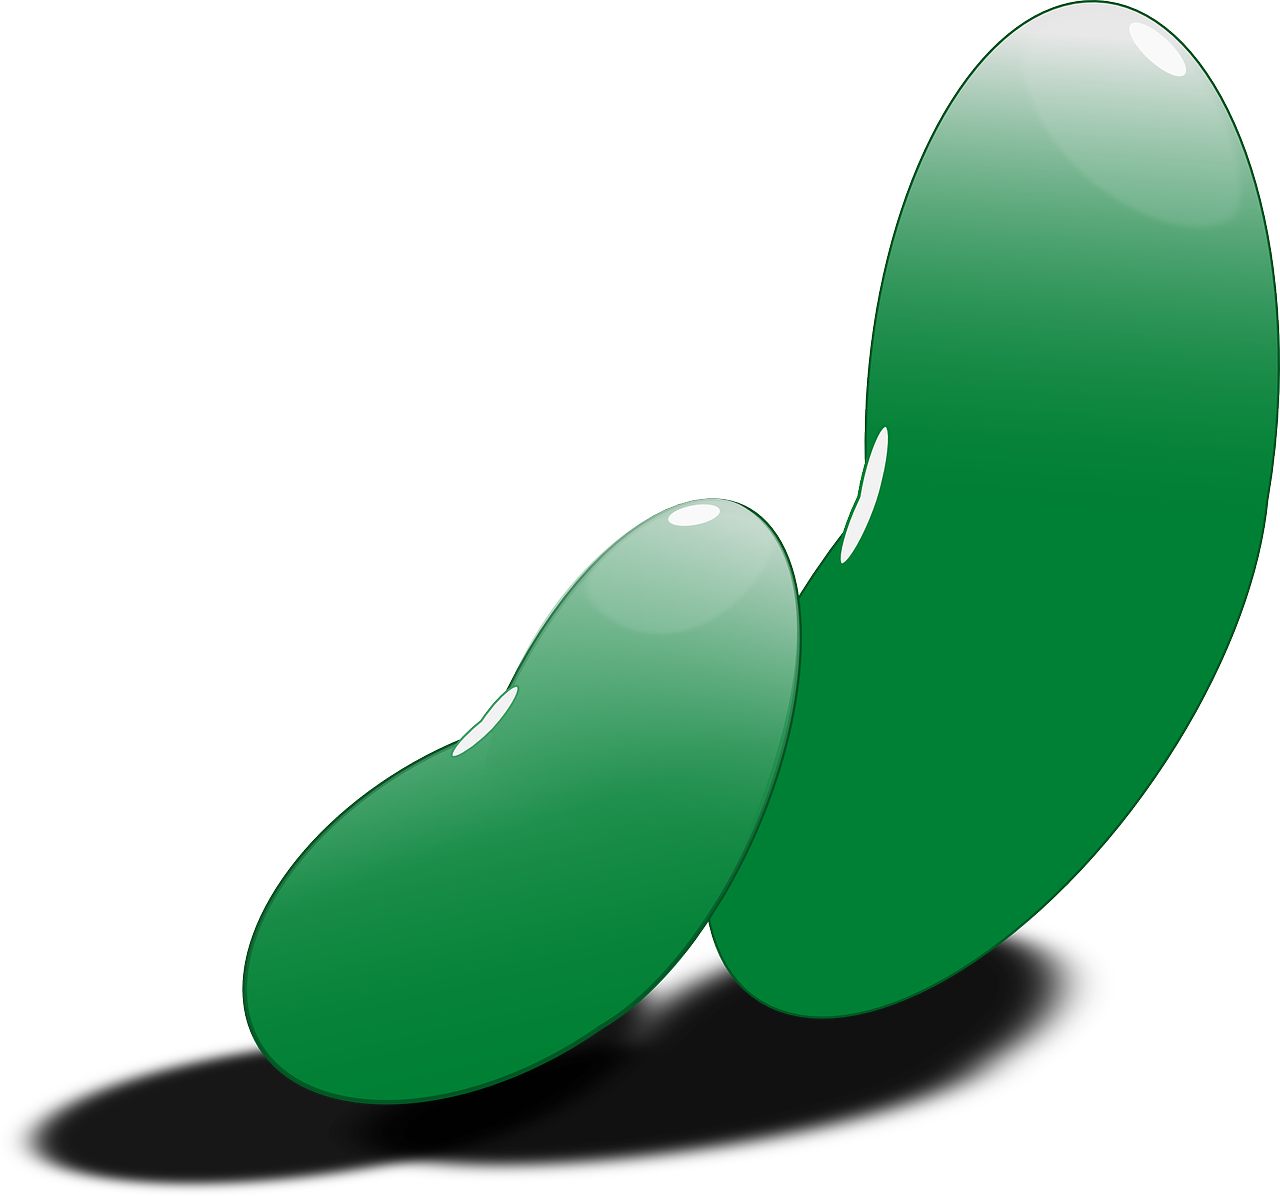 Green Beans Illustration PNG image